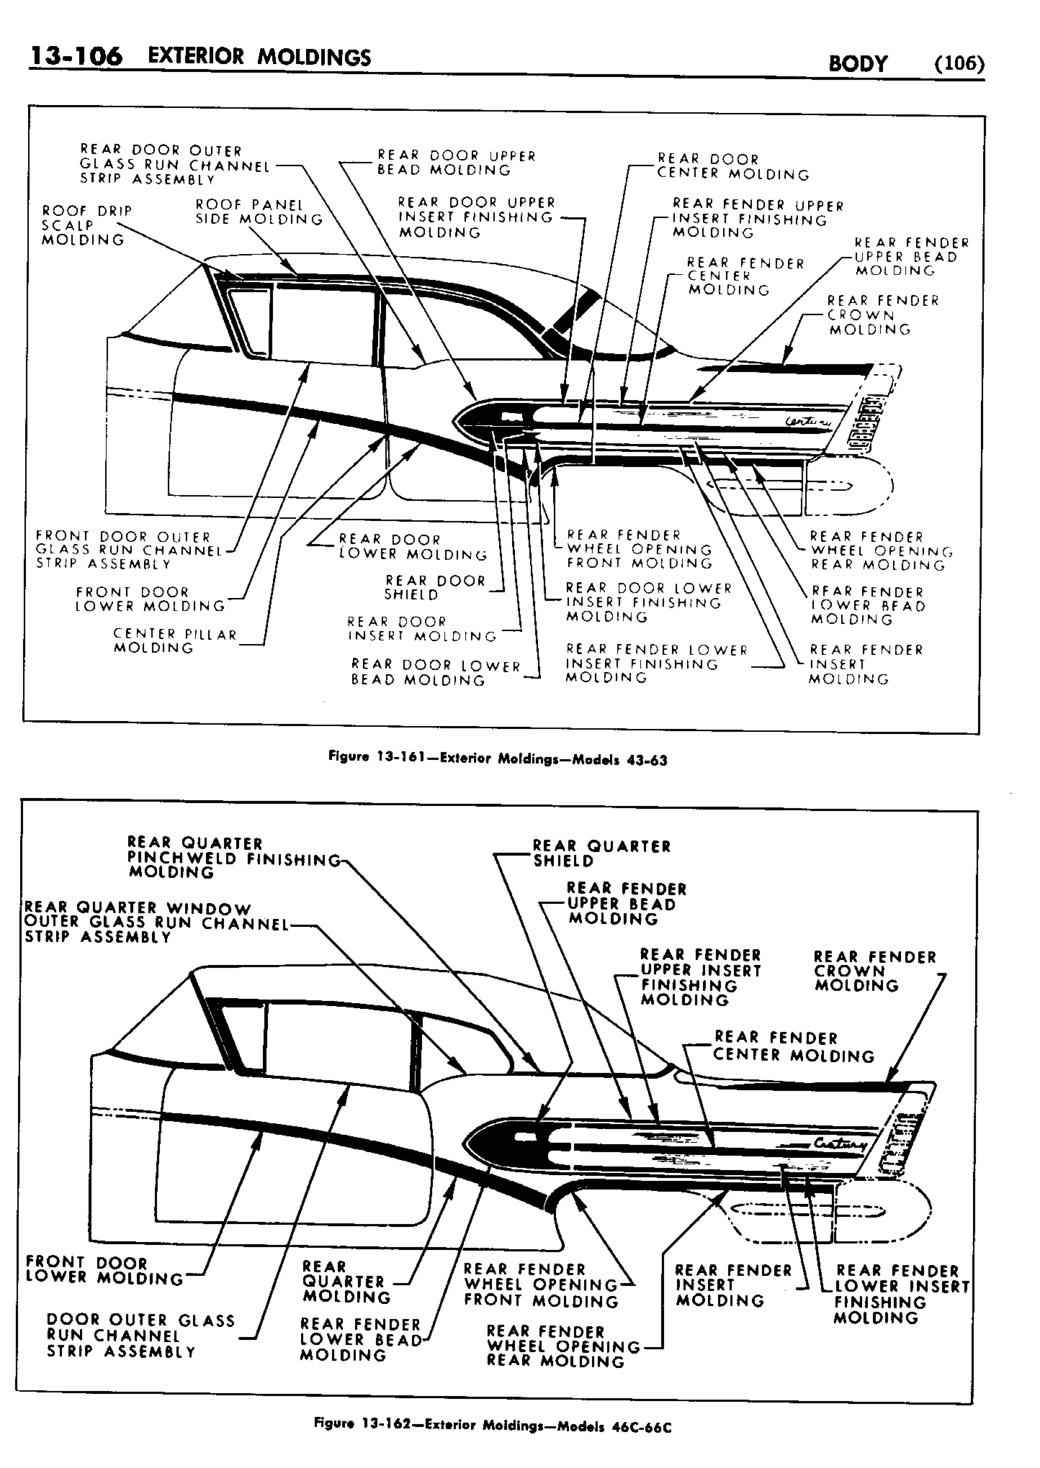 n_1958 Buick Body Service Manual-107-107.jpg